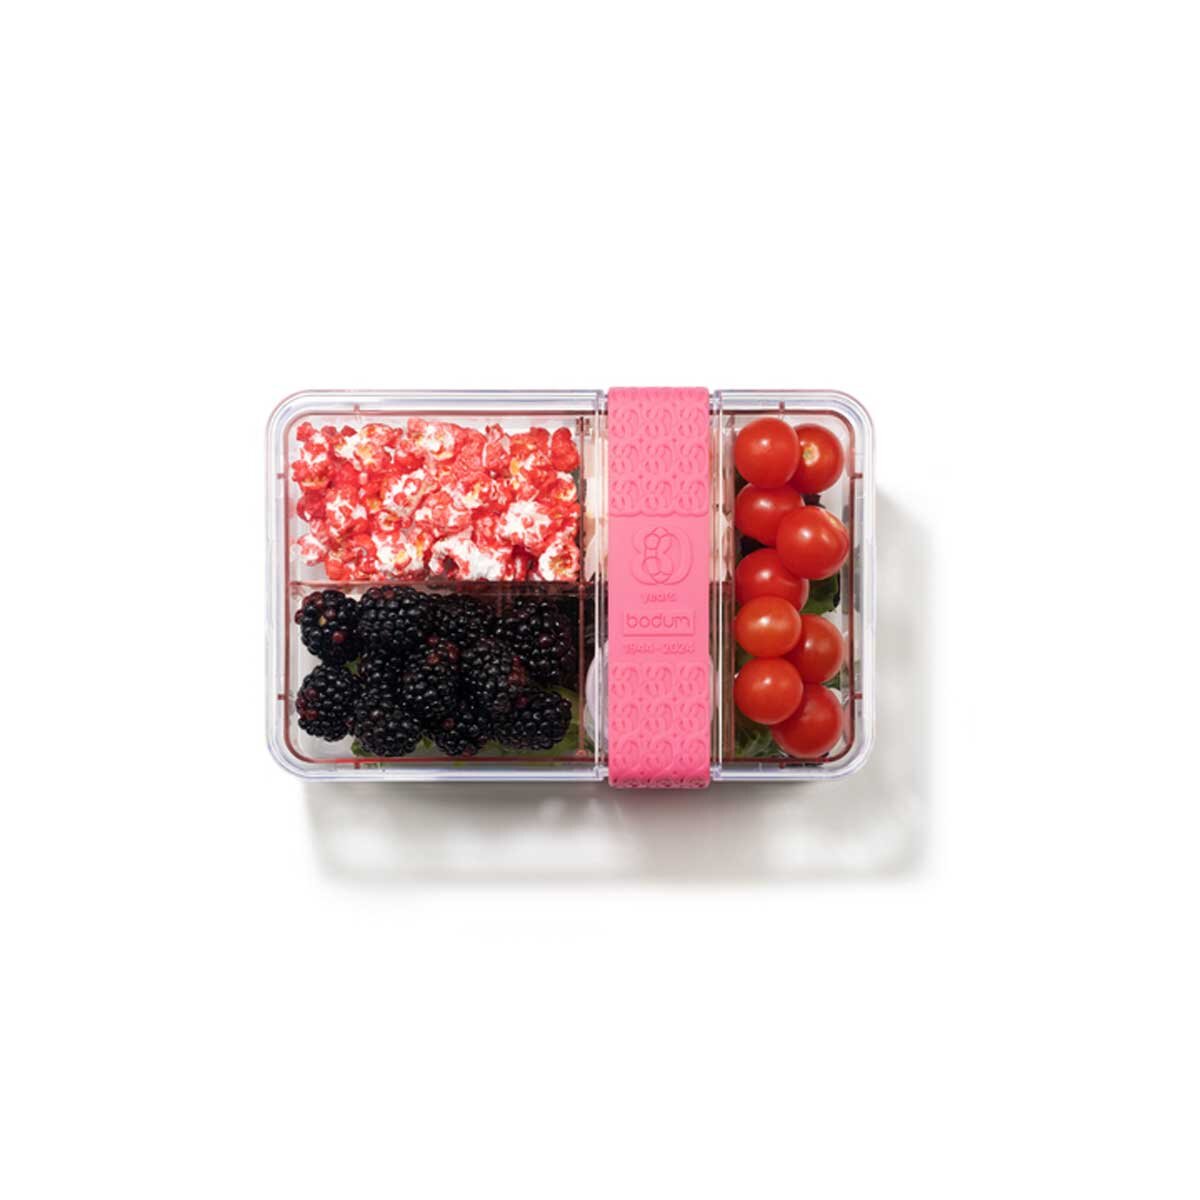 Bodum Lunch Box & Travel Mug (0.35L) Set - Pink